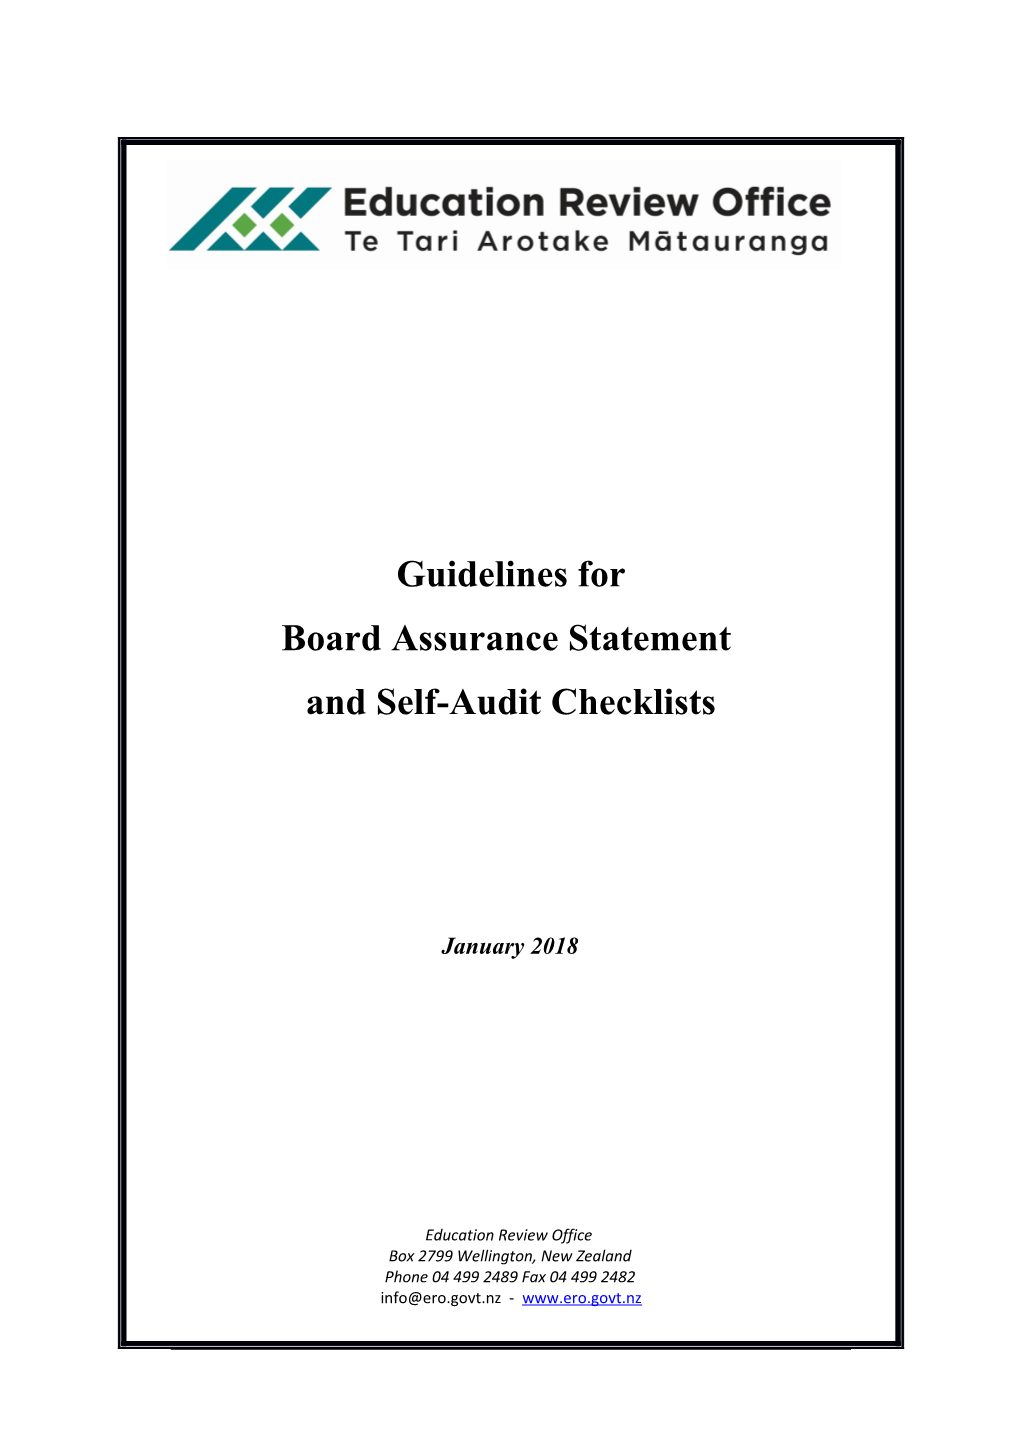 Board Assurance Statement and Self-Audit Checklistspage 1